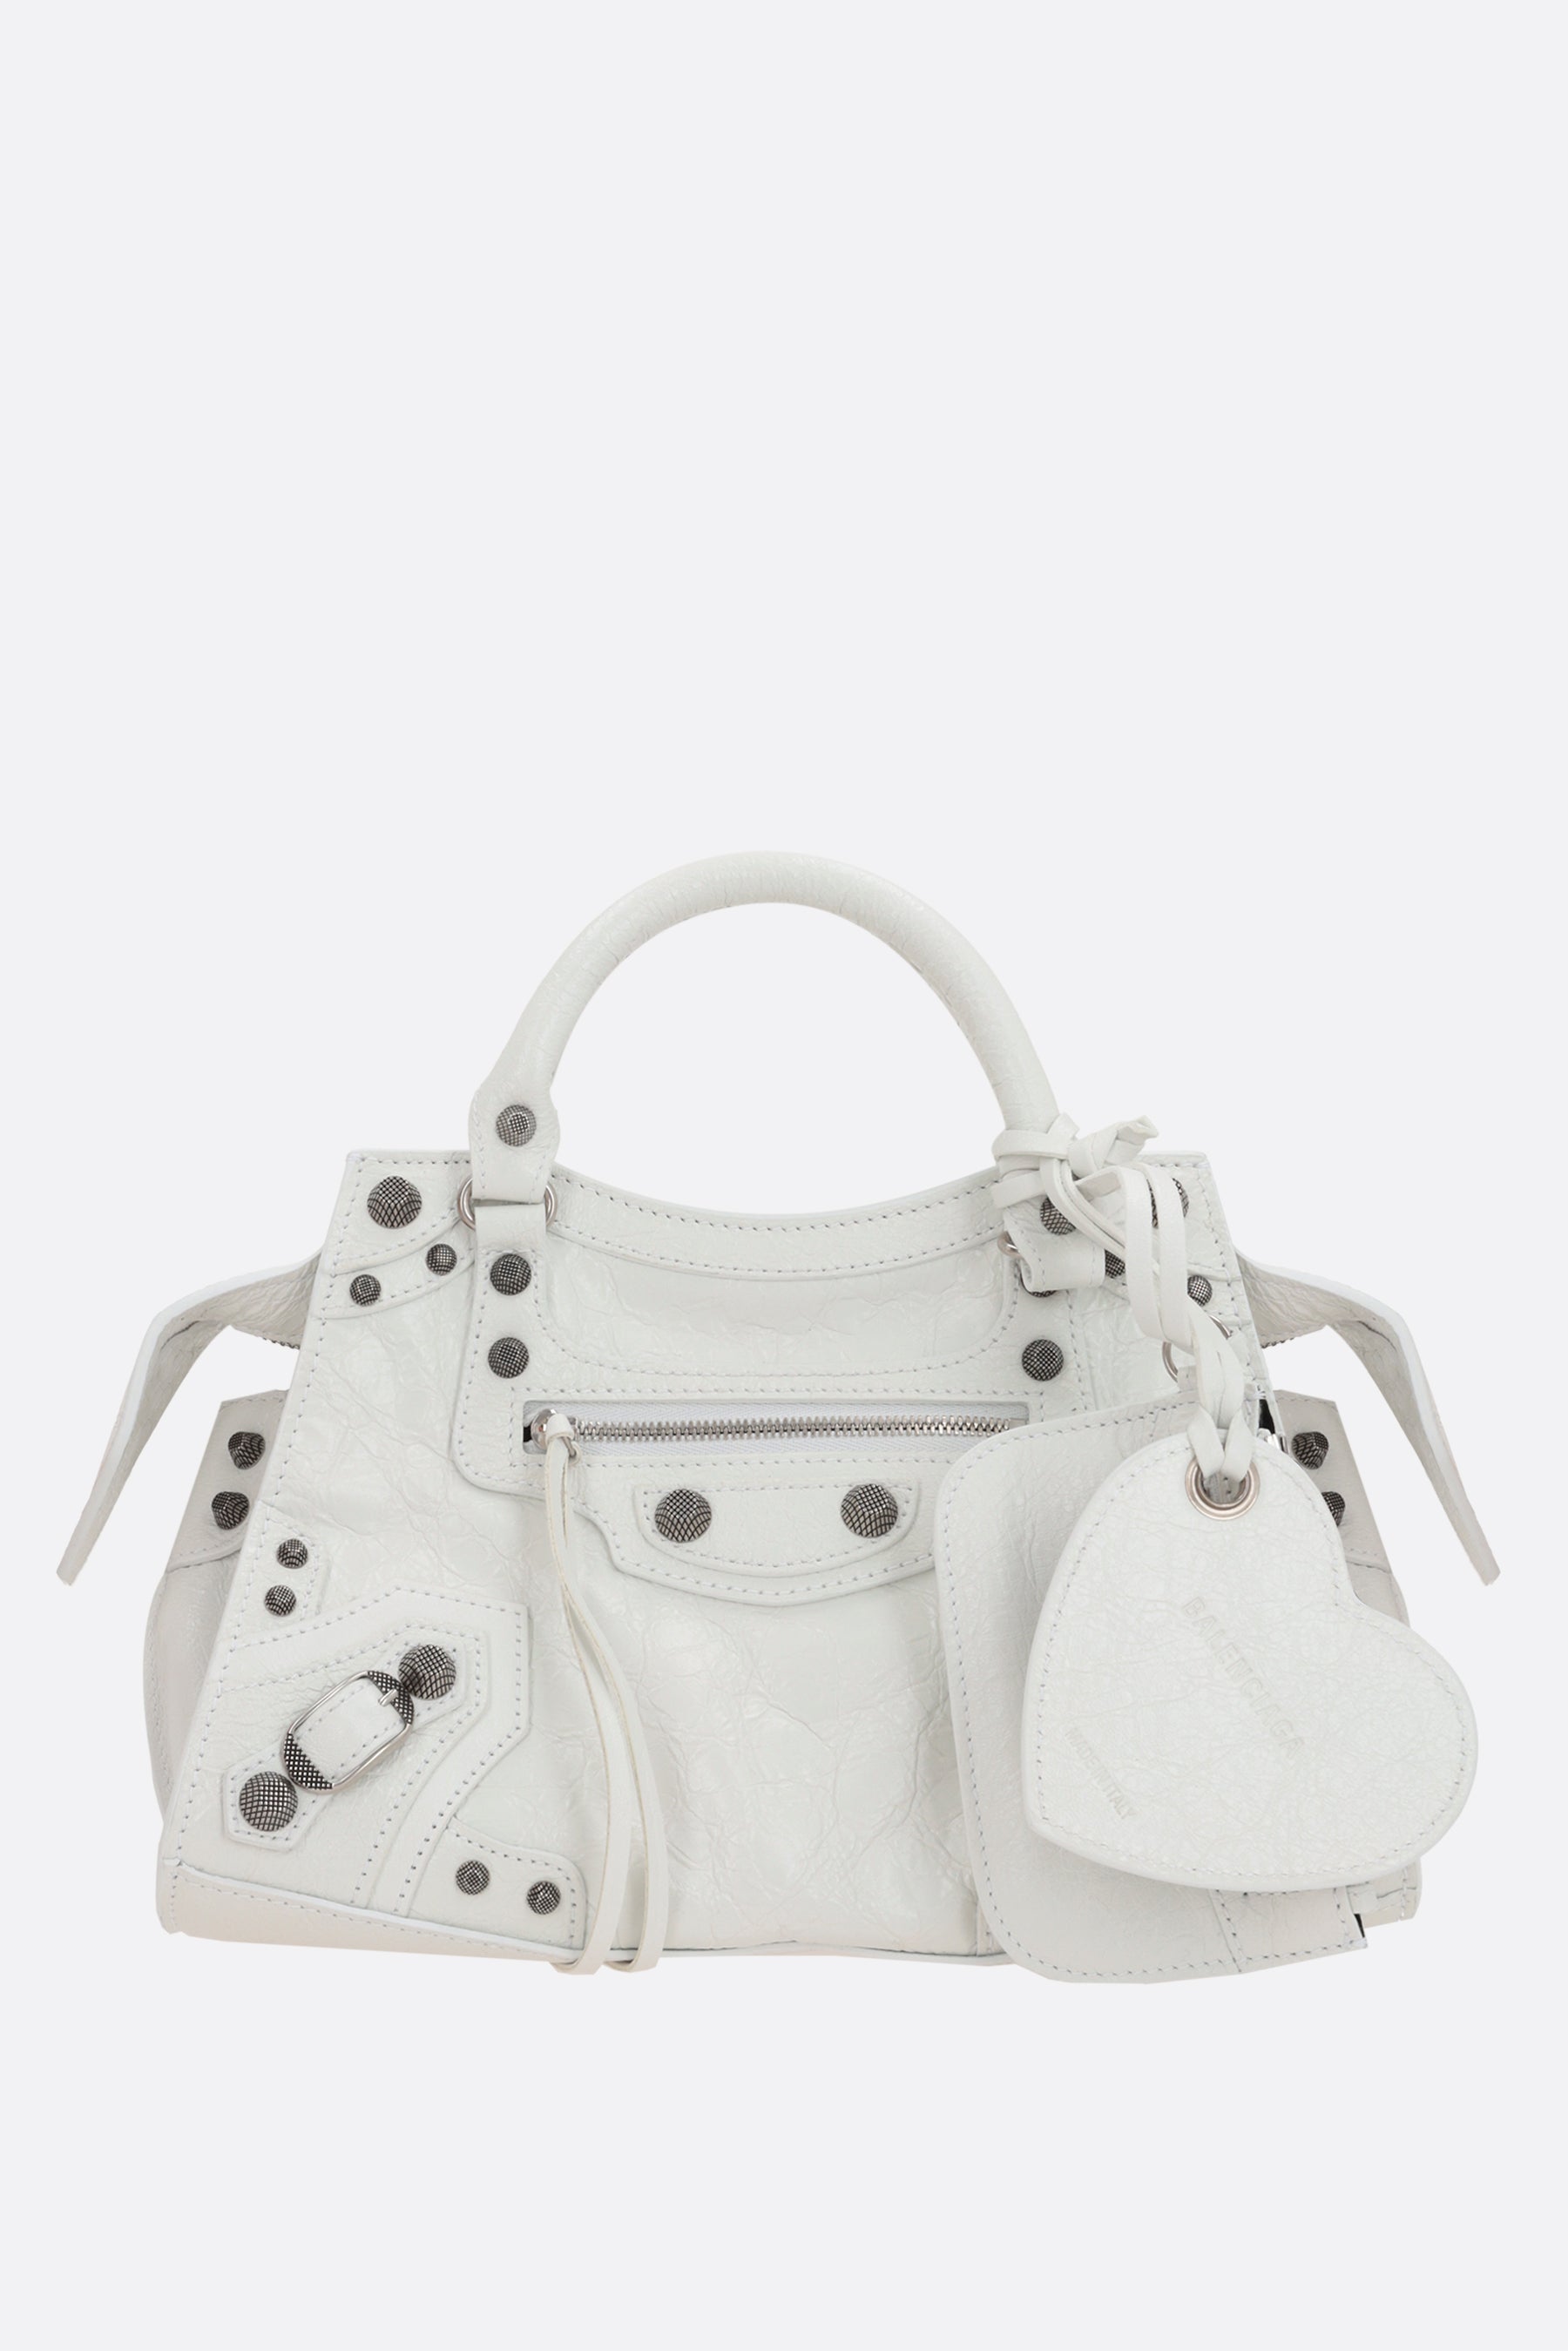 Women's Neo Cagole City Small Handbag in Optic White